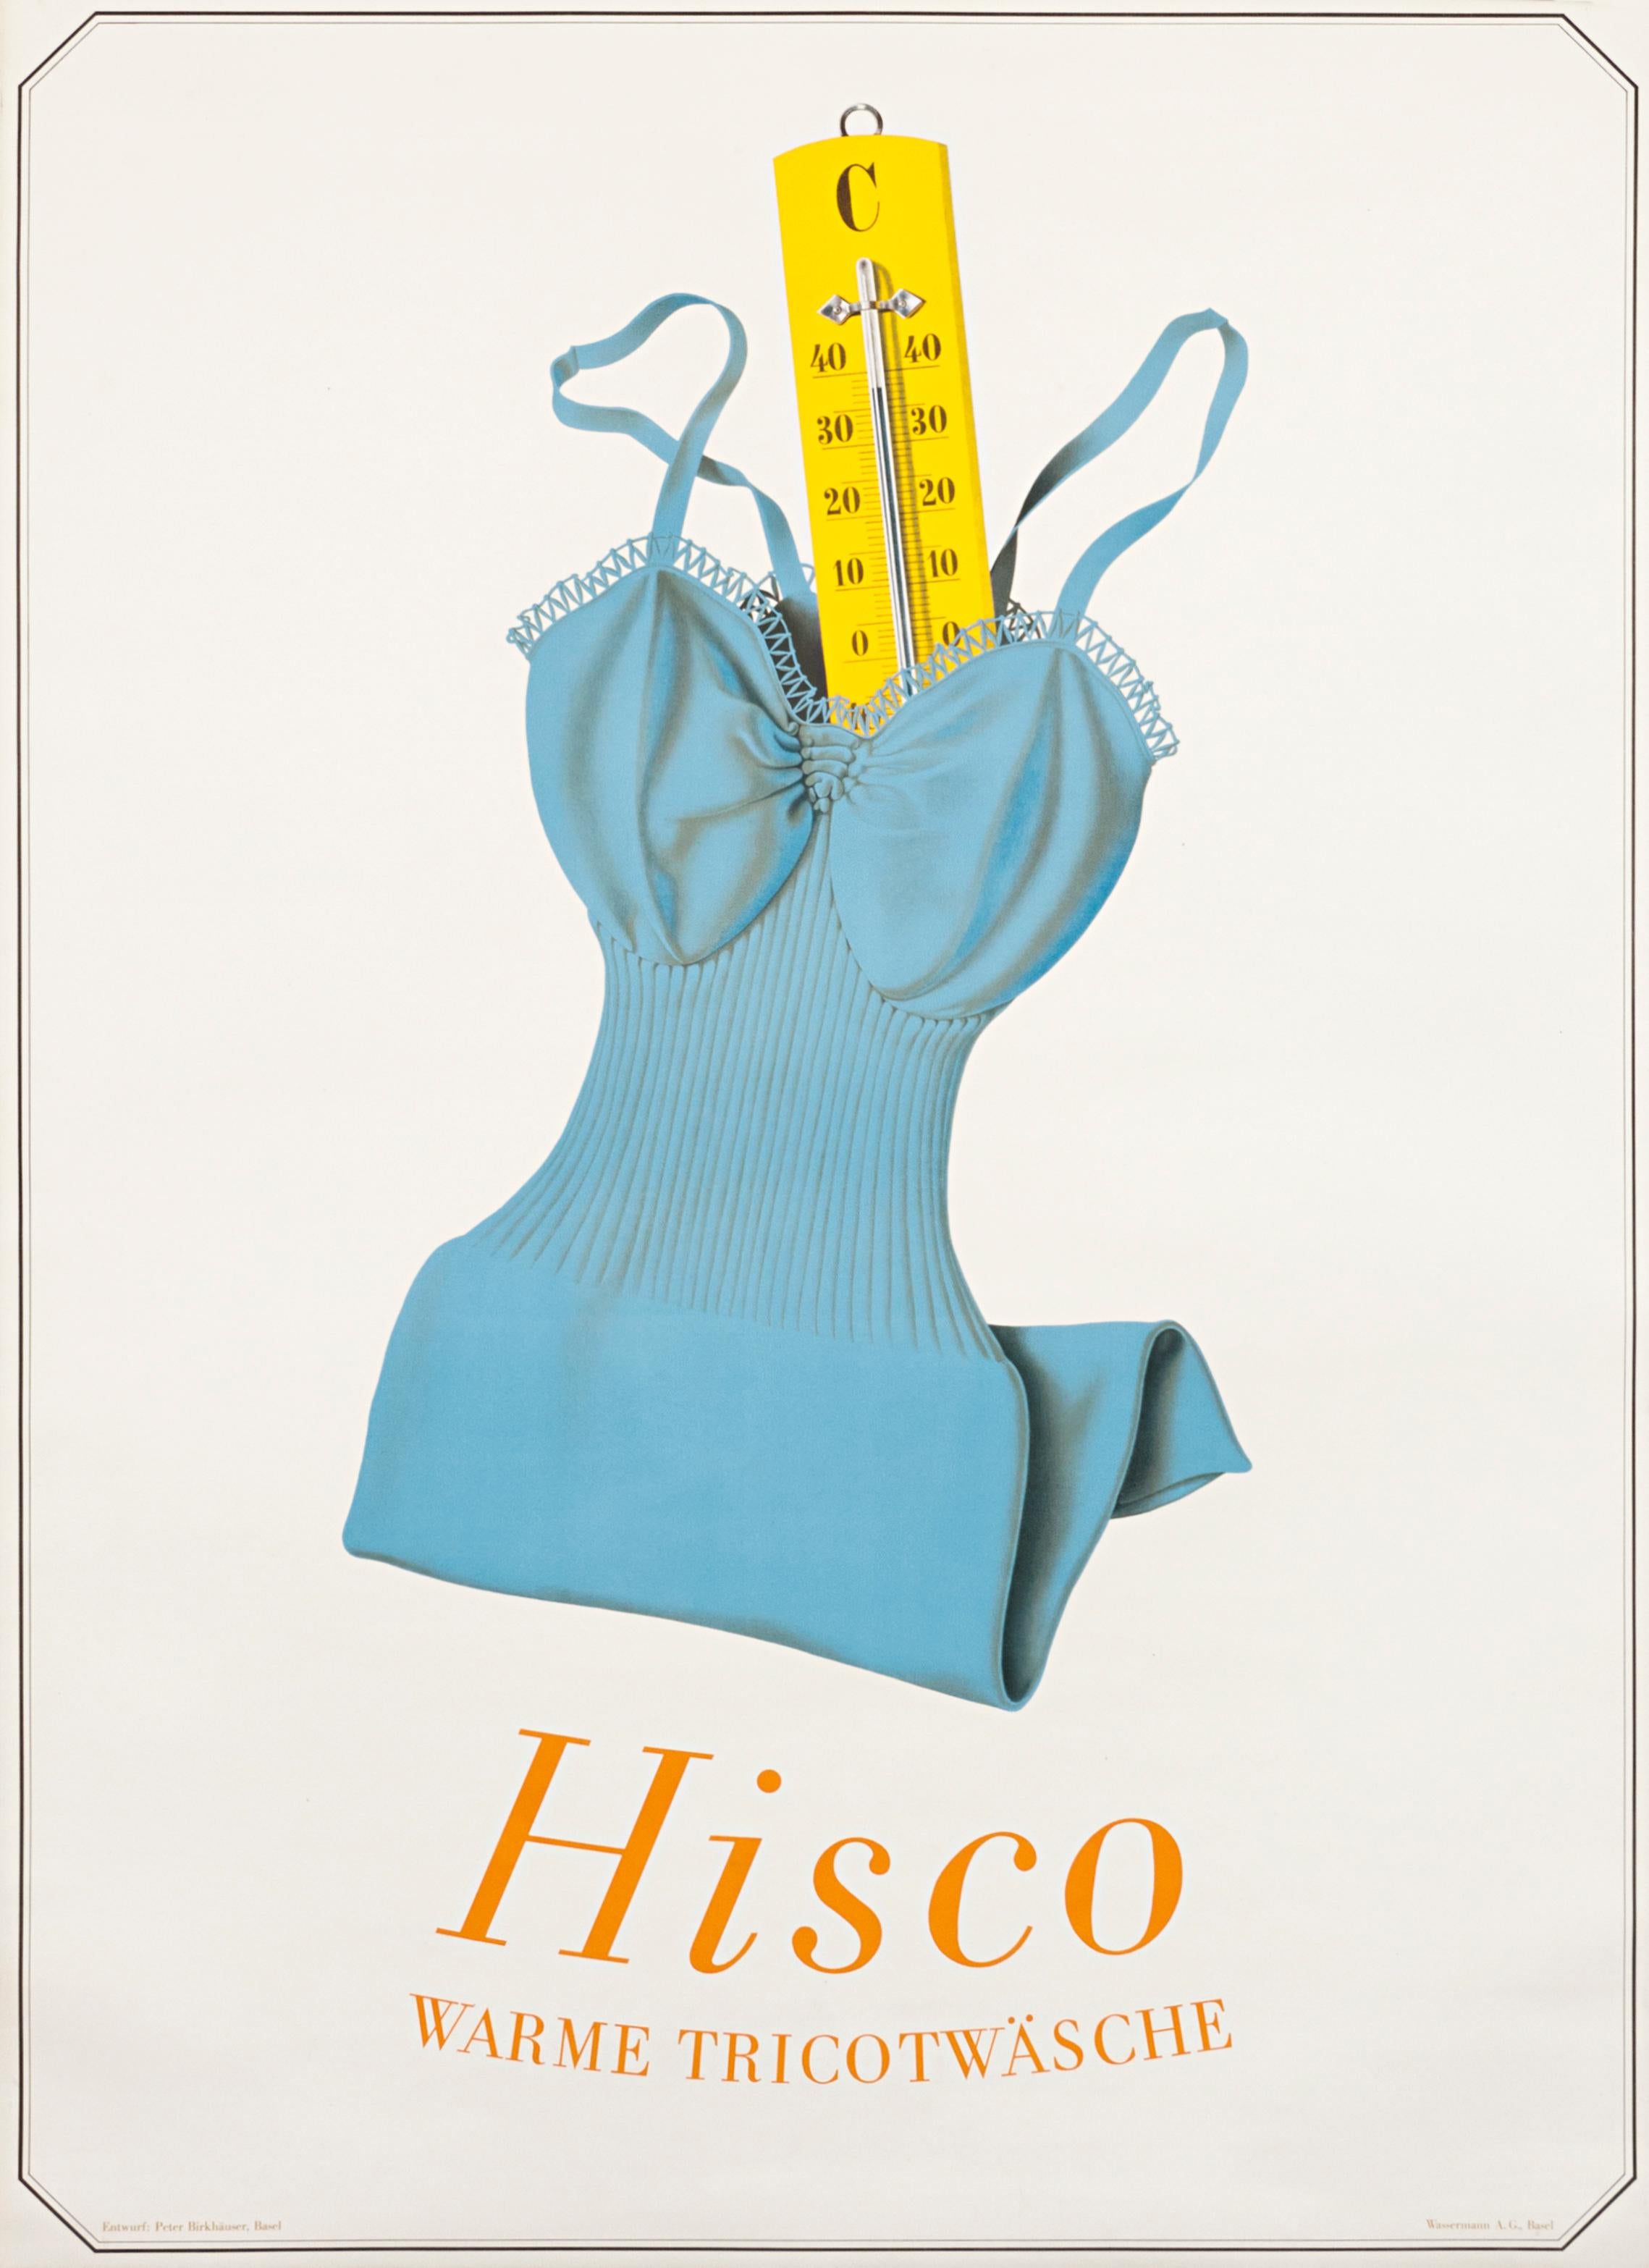 Peter Birkhauser Still-Life Print - "Hisco" - Original Vintage 1940s Clothing Swiss Object Poster by Birkhauser